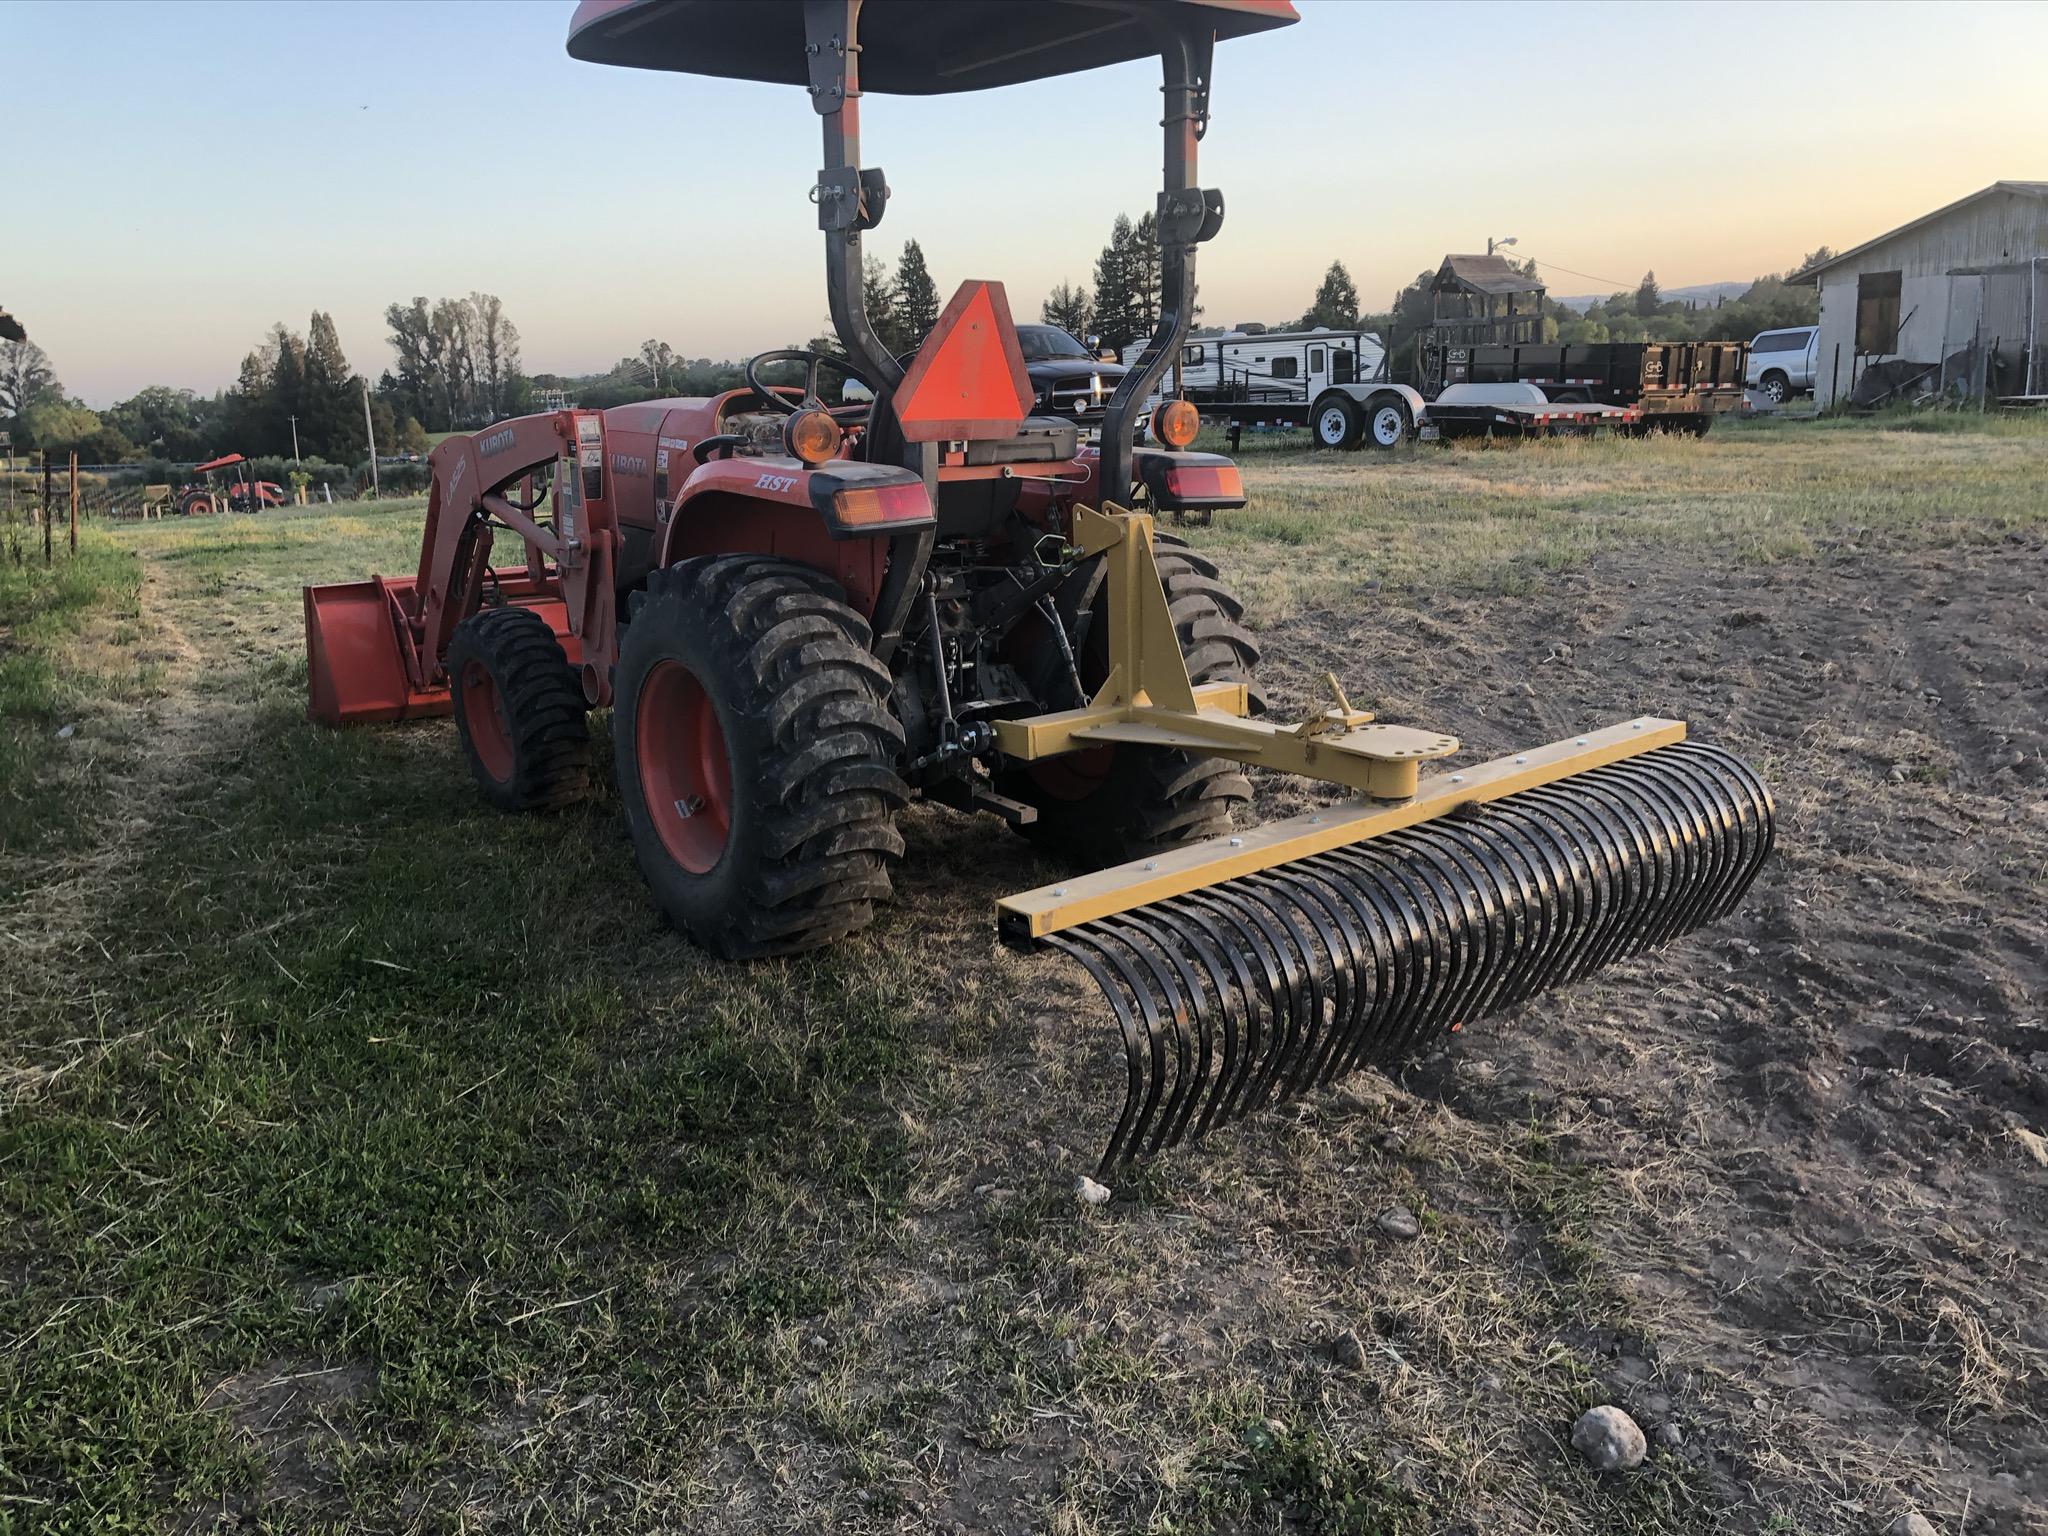 Tractor Rake